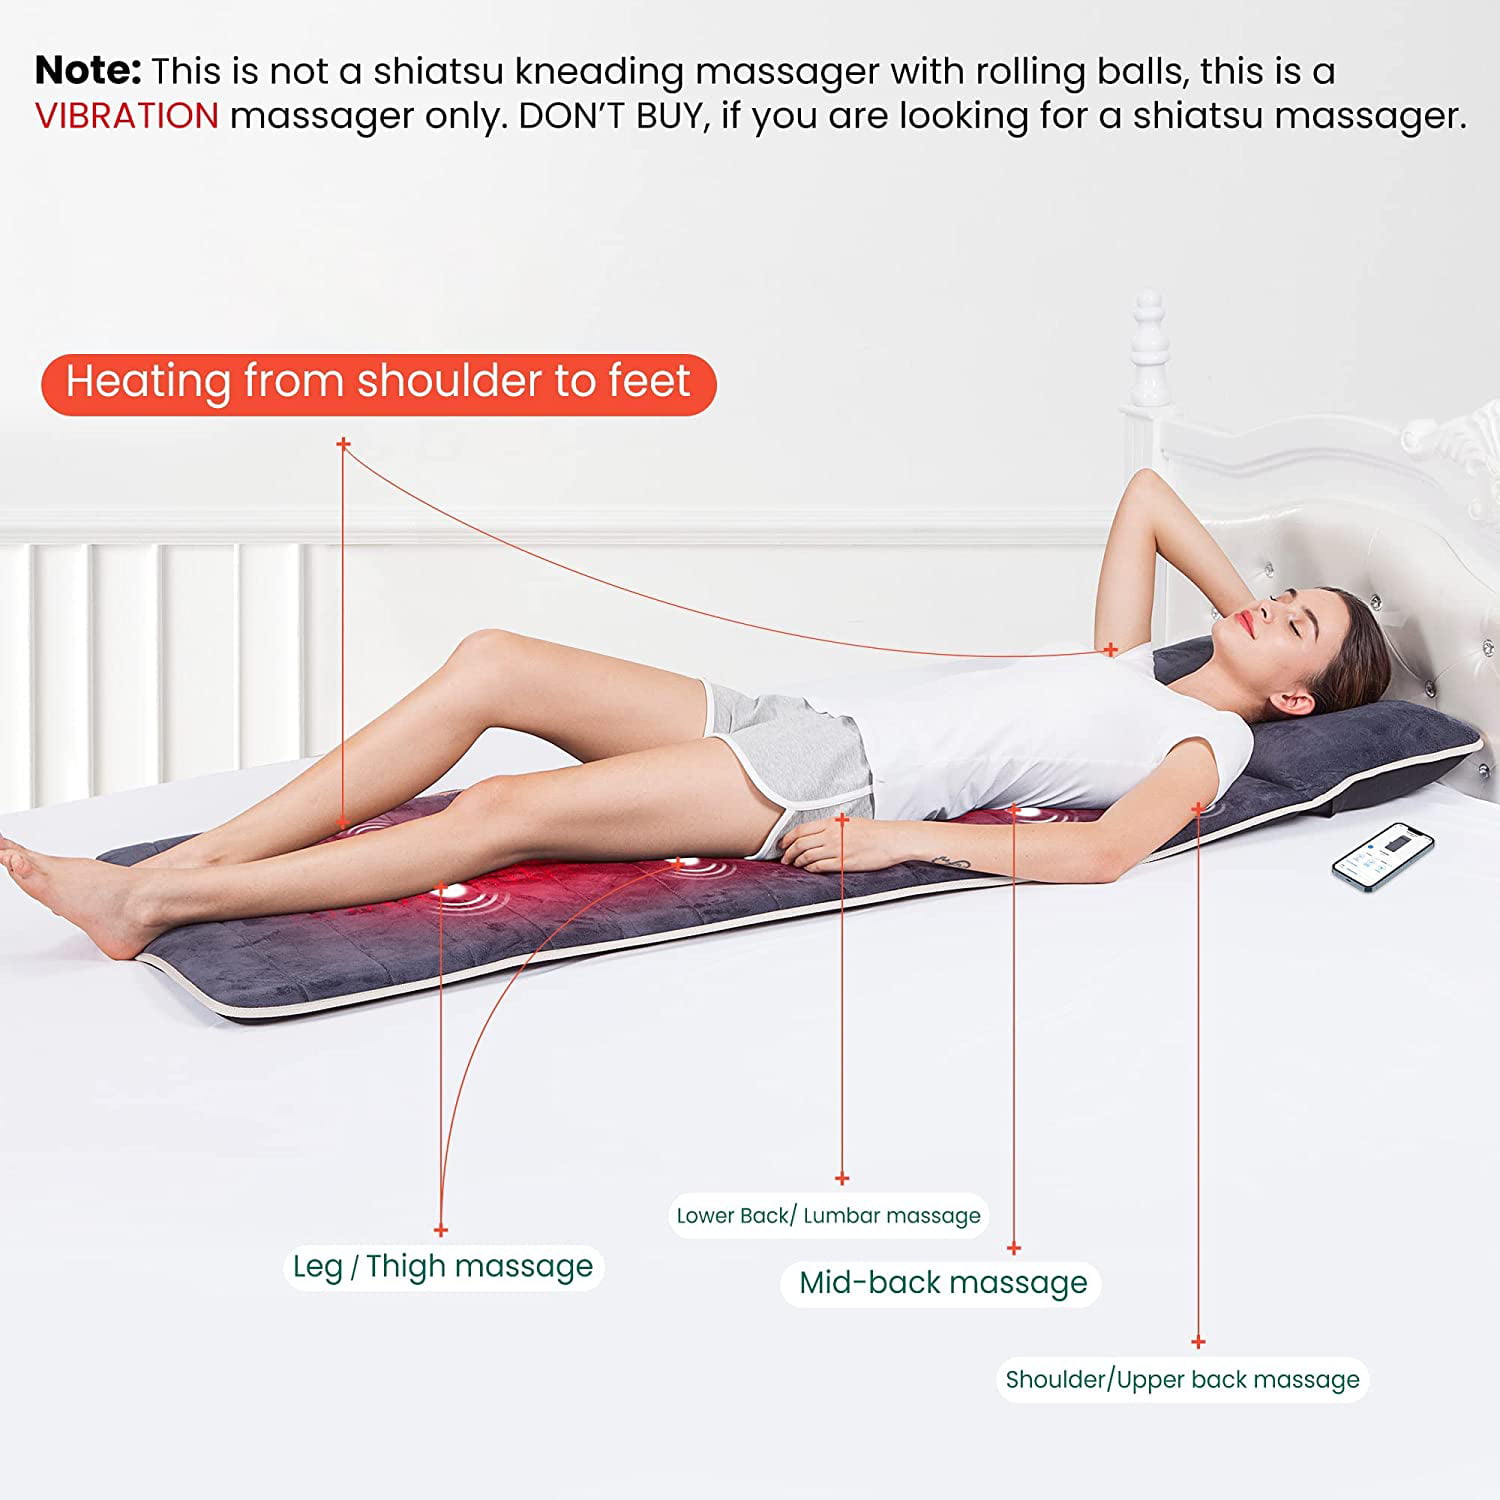  Snailax Massage Mat with 10 Vibrating Motors and 4